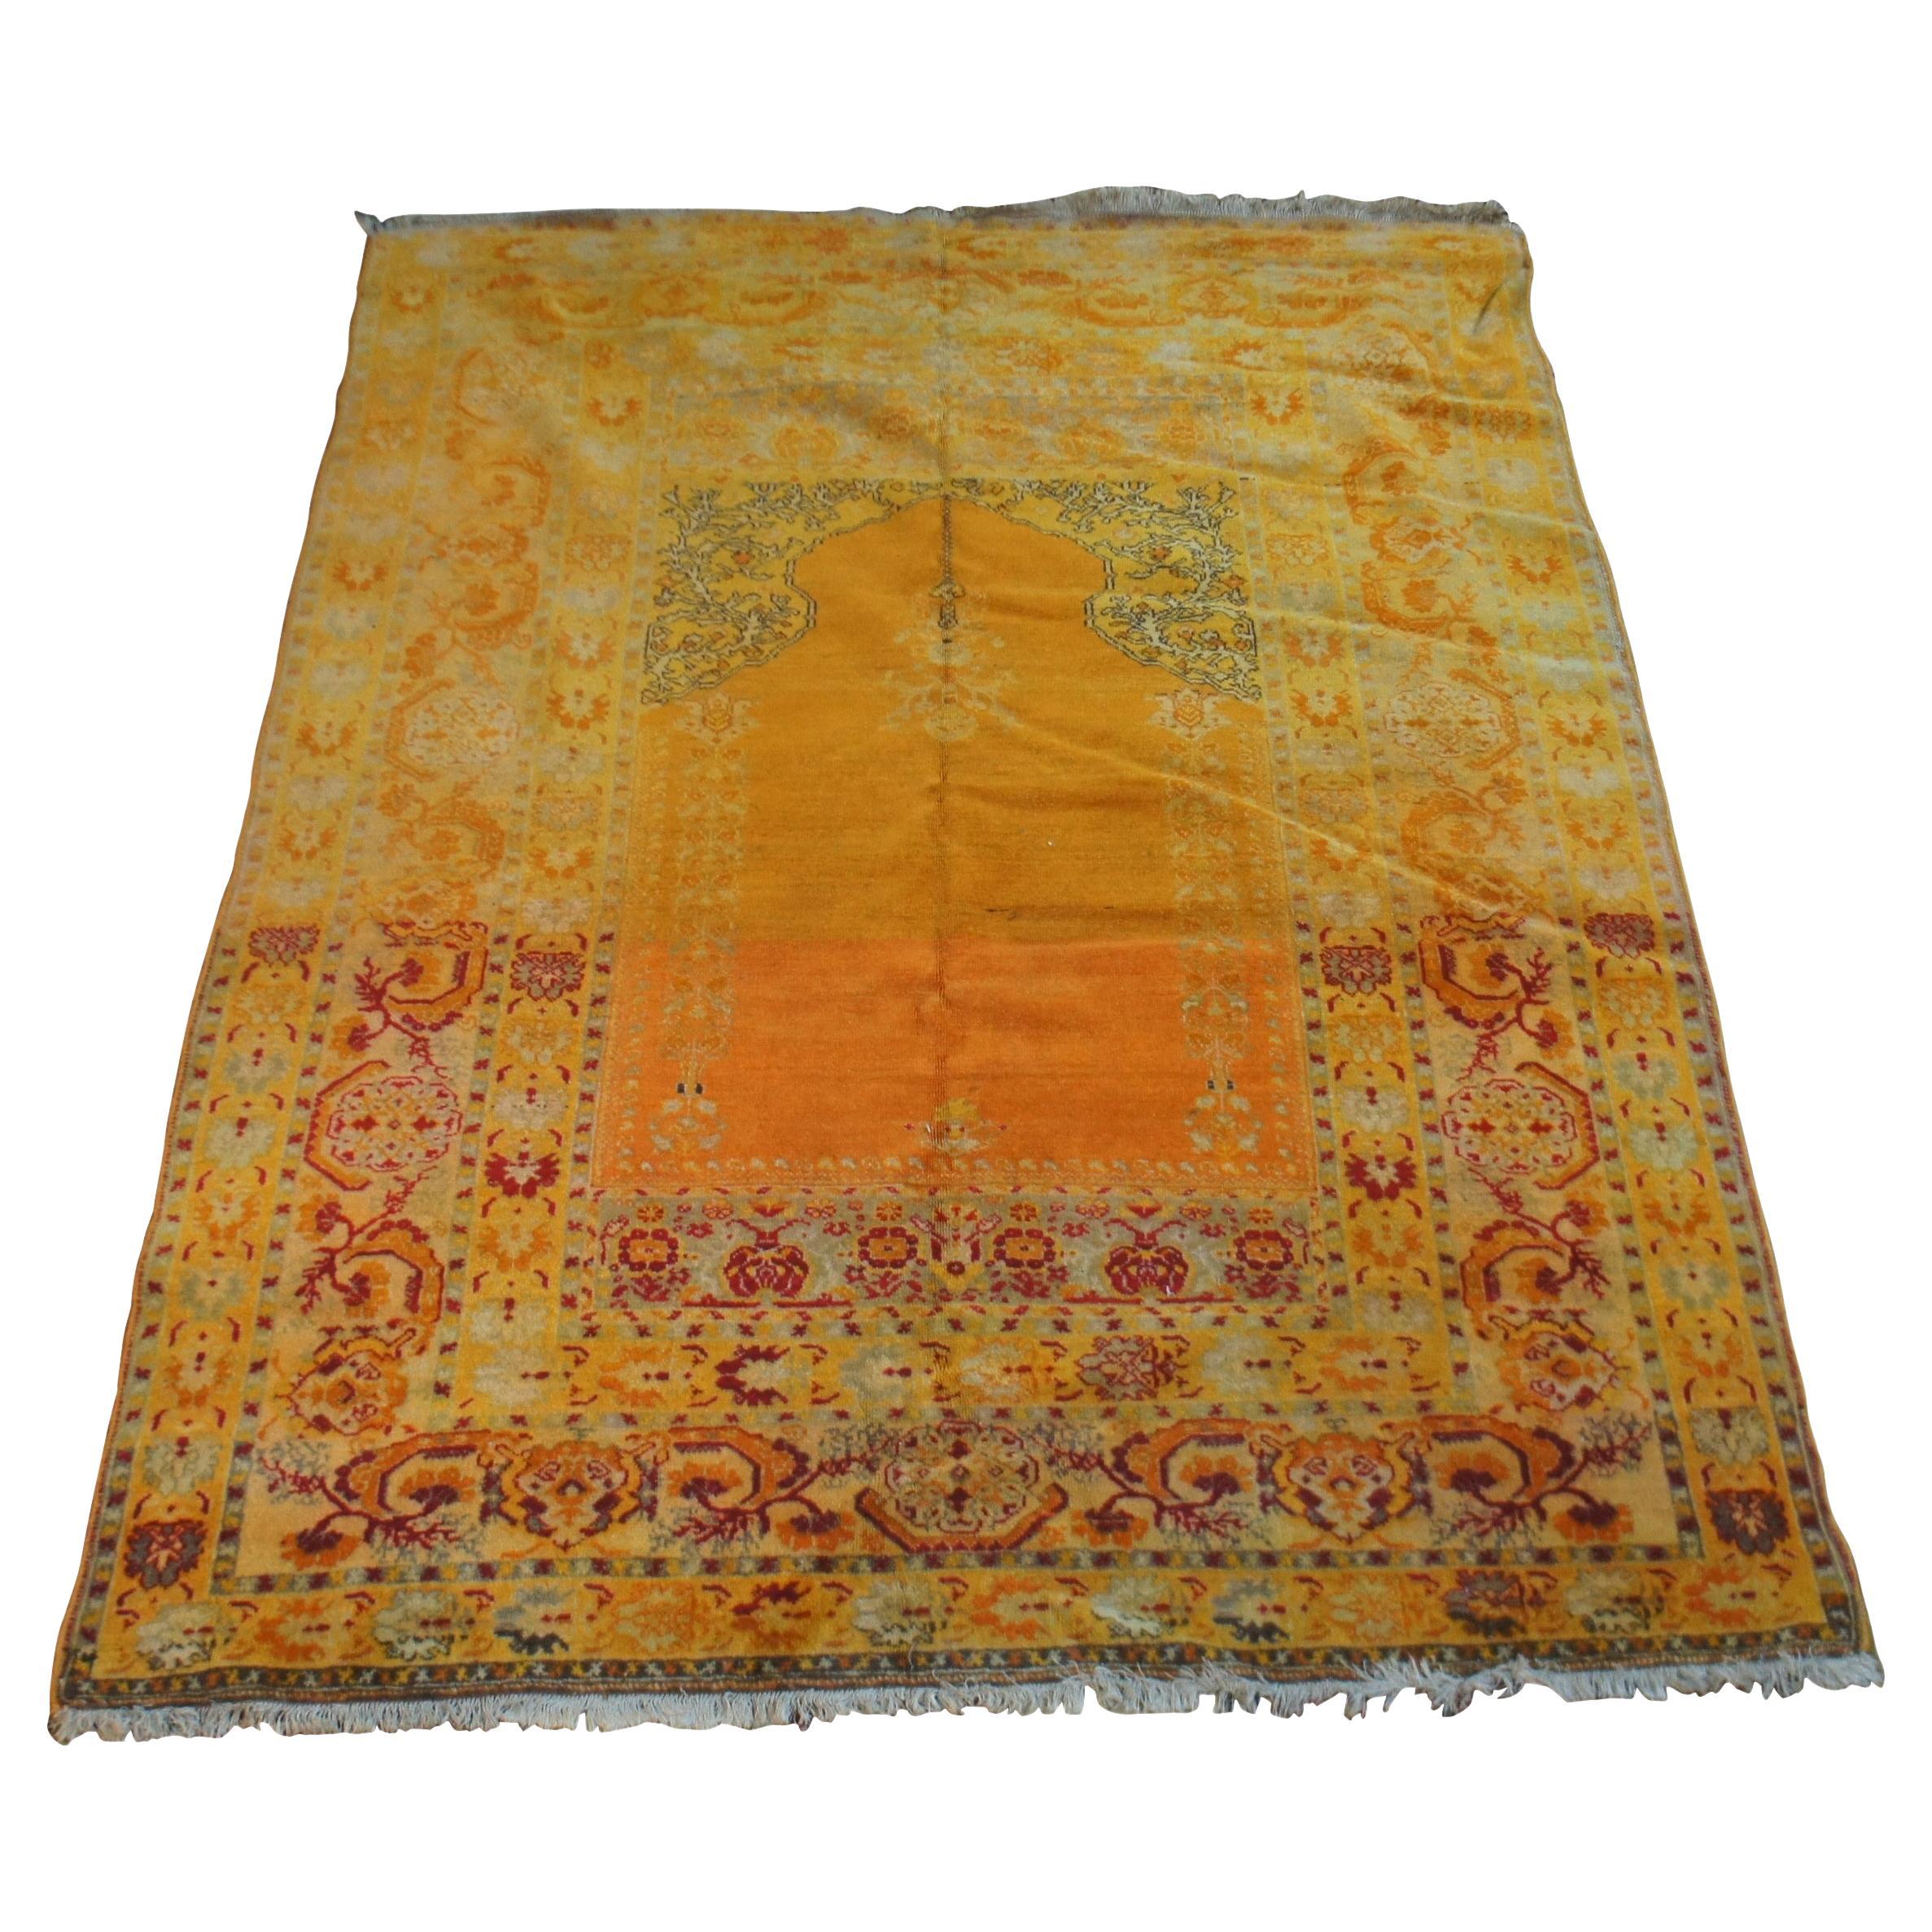 Antique Handmade Wool Geometric Orange Red Turkish Prayer Rug Mat Carpet 6’ x 4’